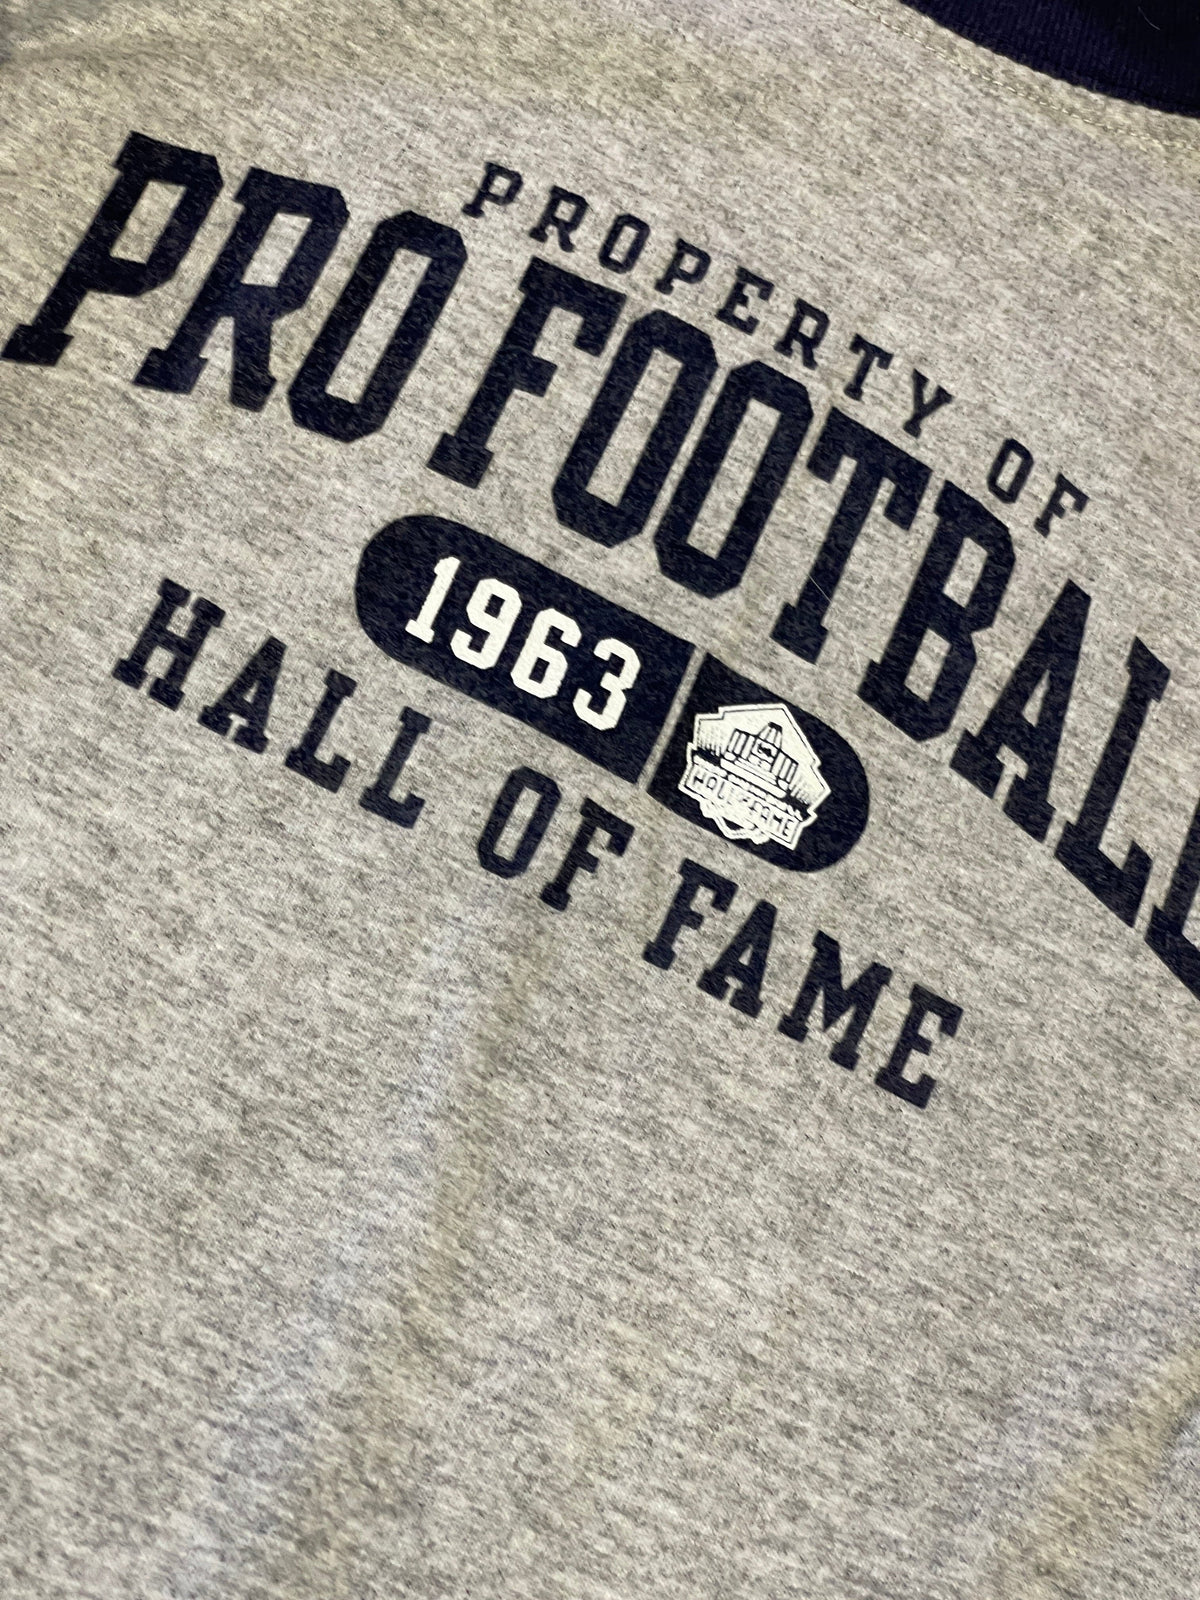 NFL Hall of Fame Striped Raglan L/S T-Shirt Youth Medium 10-12